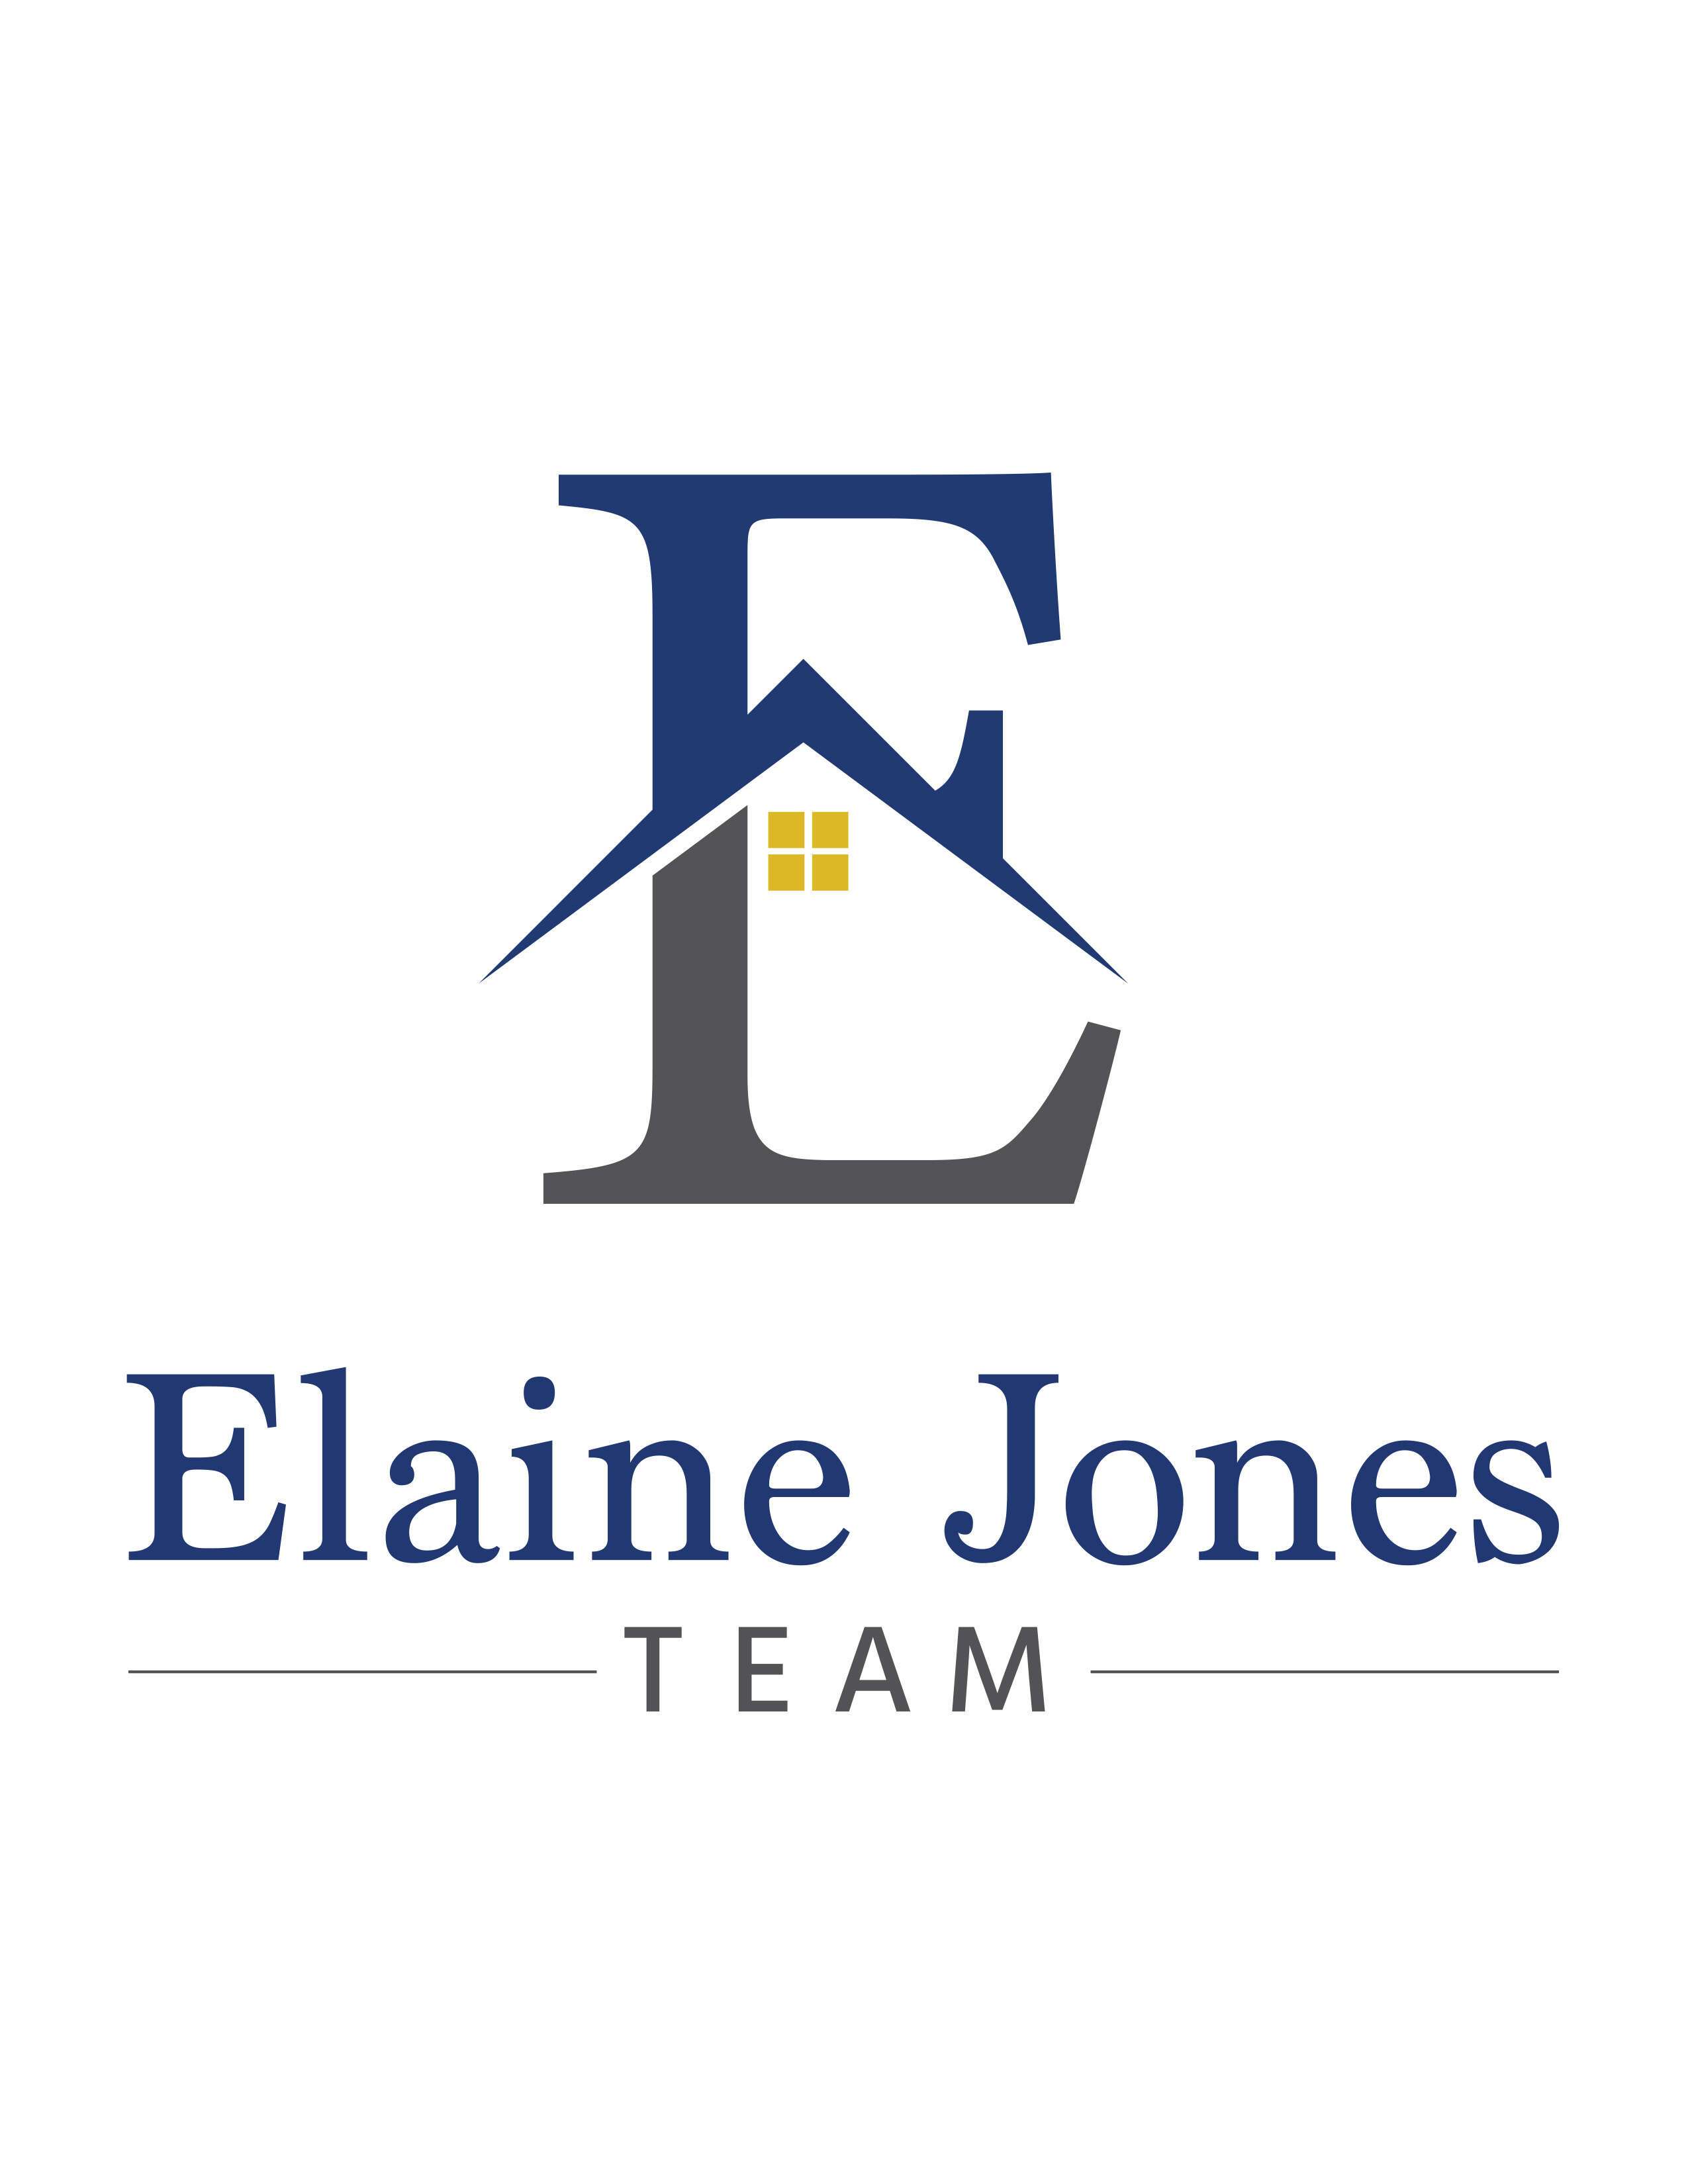 Elaine Jones Team